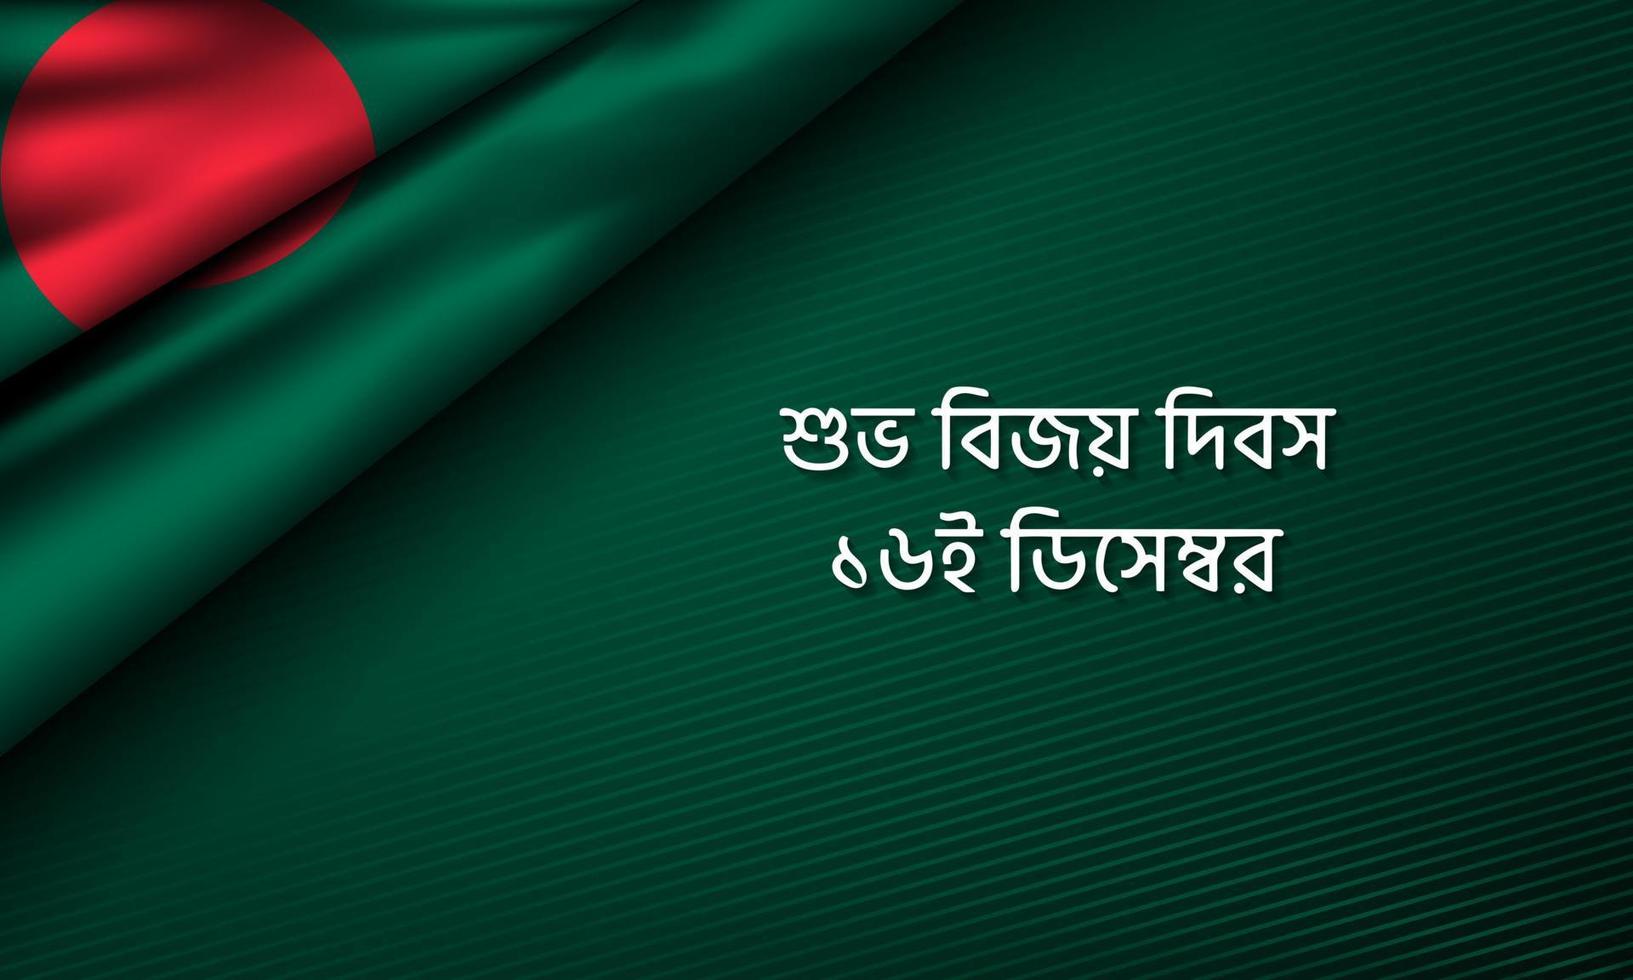 bangladesh victory day background design vector